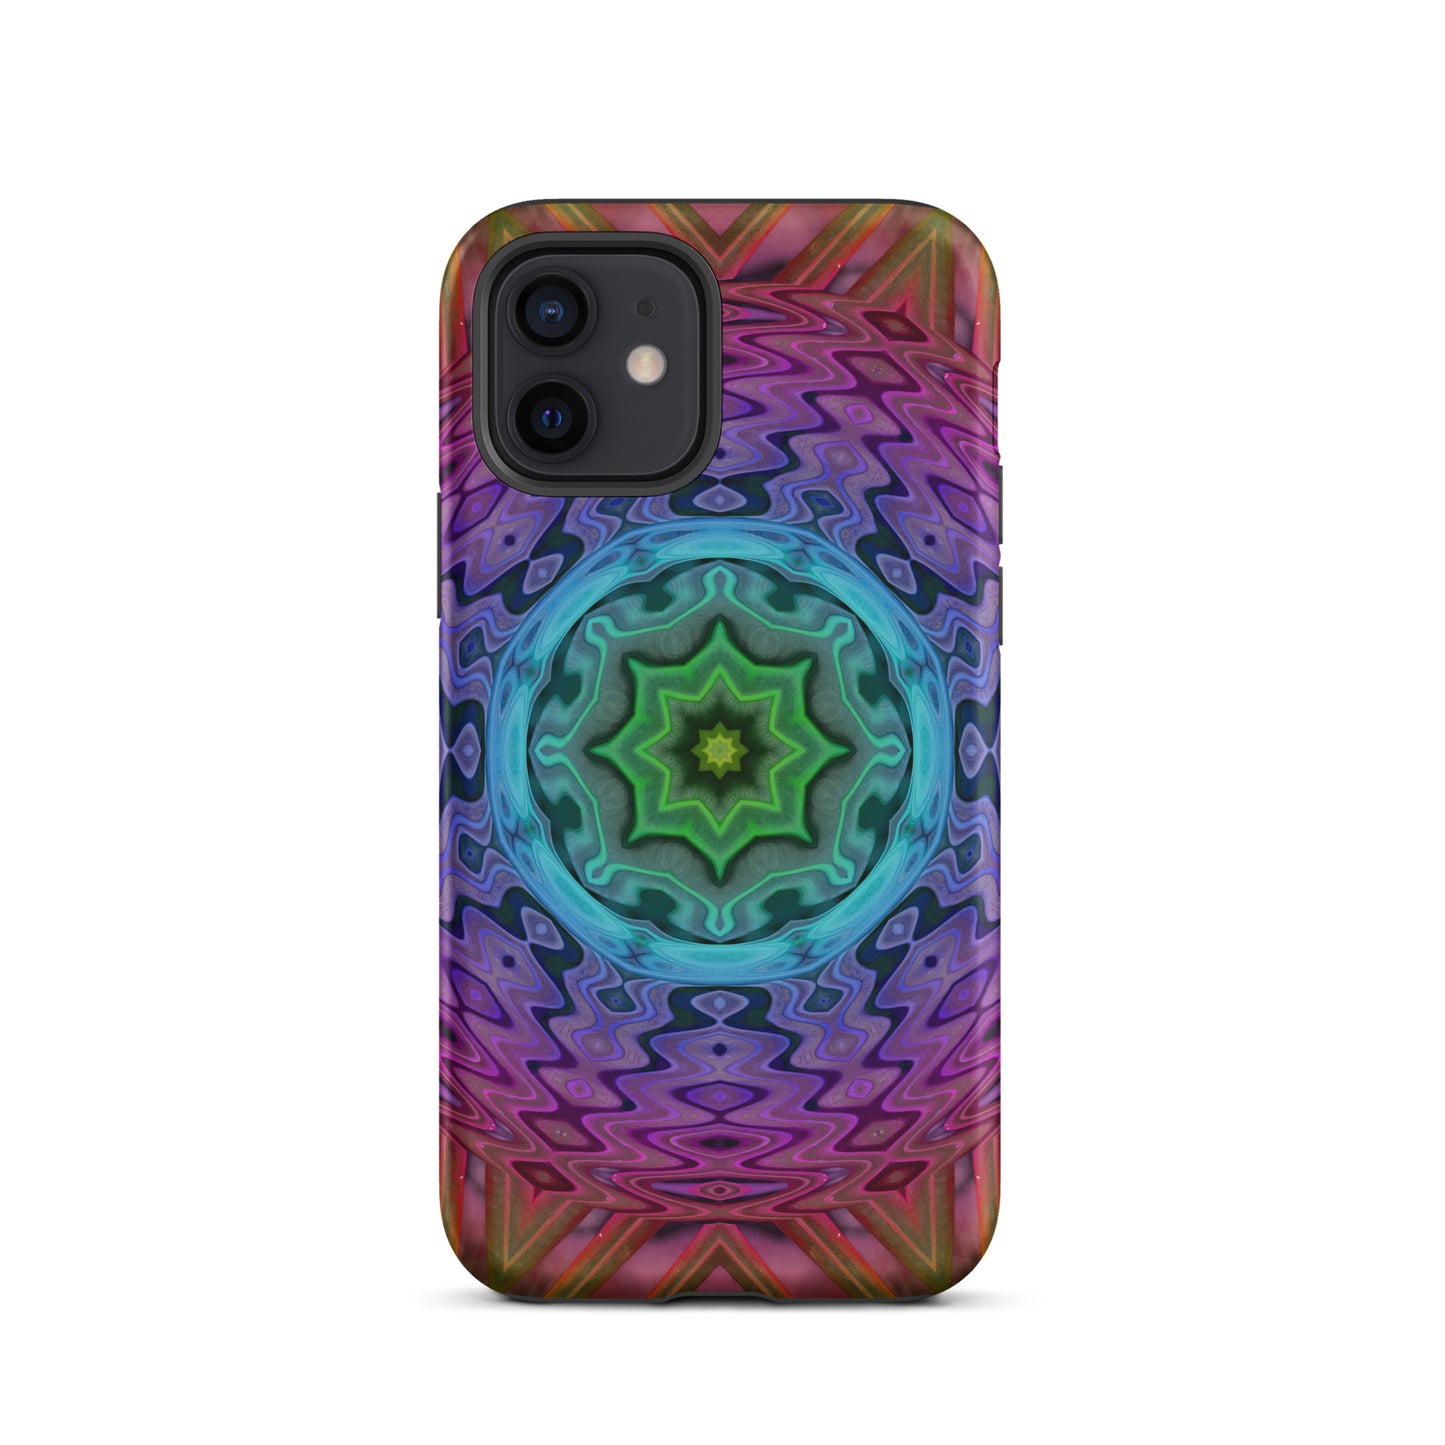 "Rainbow Abode" iCanvas Tough iPhone case